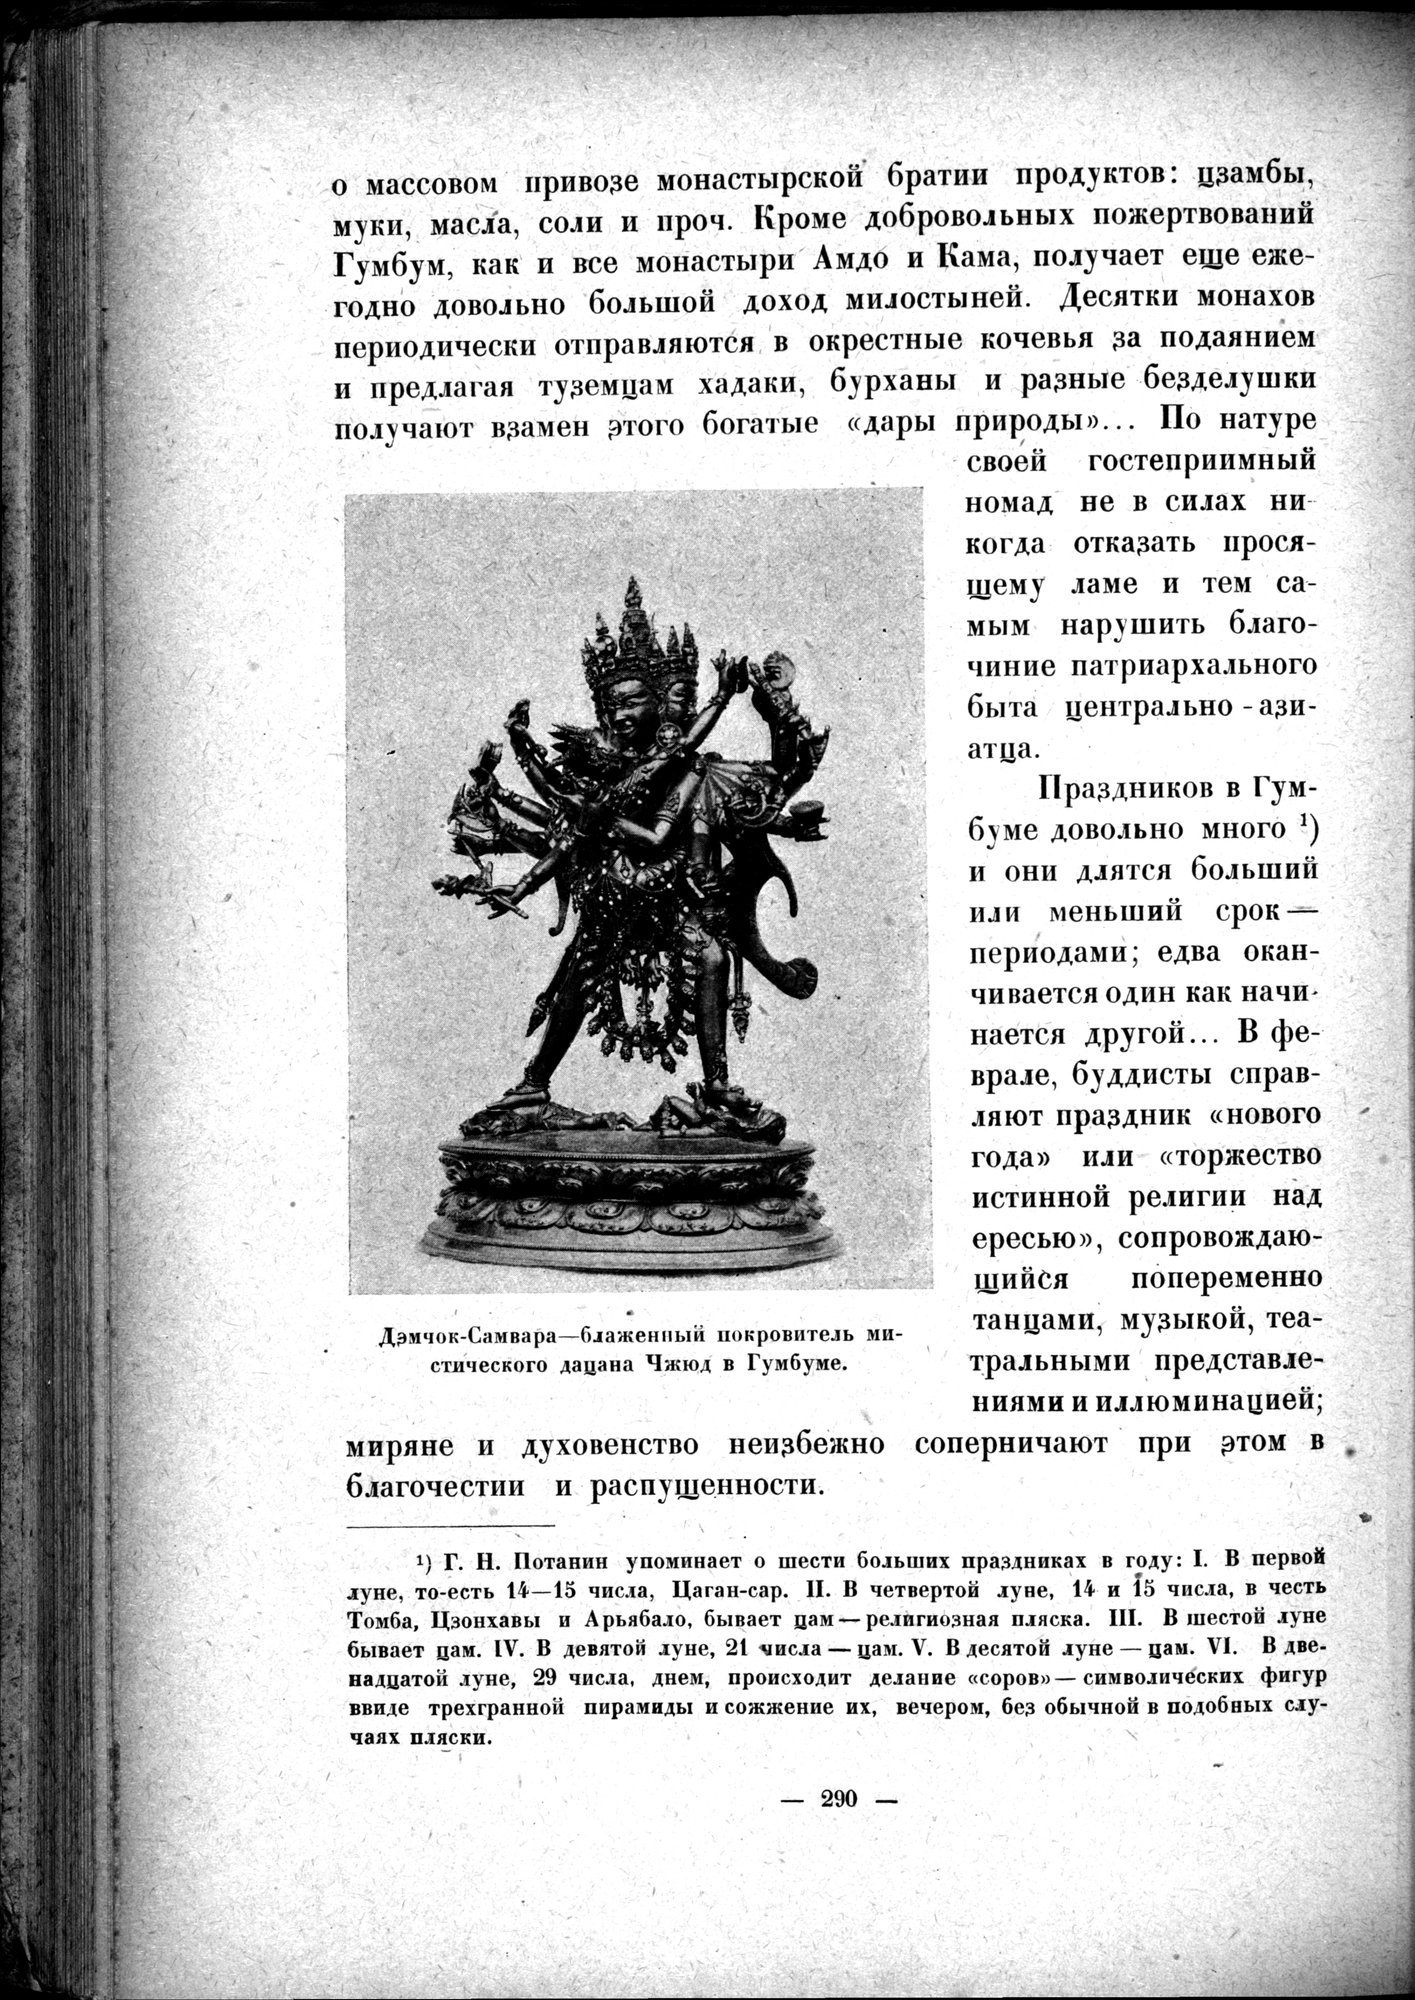 Mongoliya i Amdo i mertby gorod Khara-Khoto : vol.1 / Page 340 (Grayscale High Resolution Image)